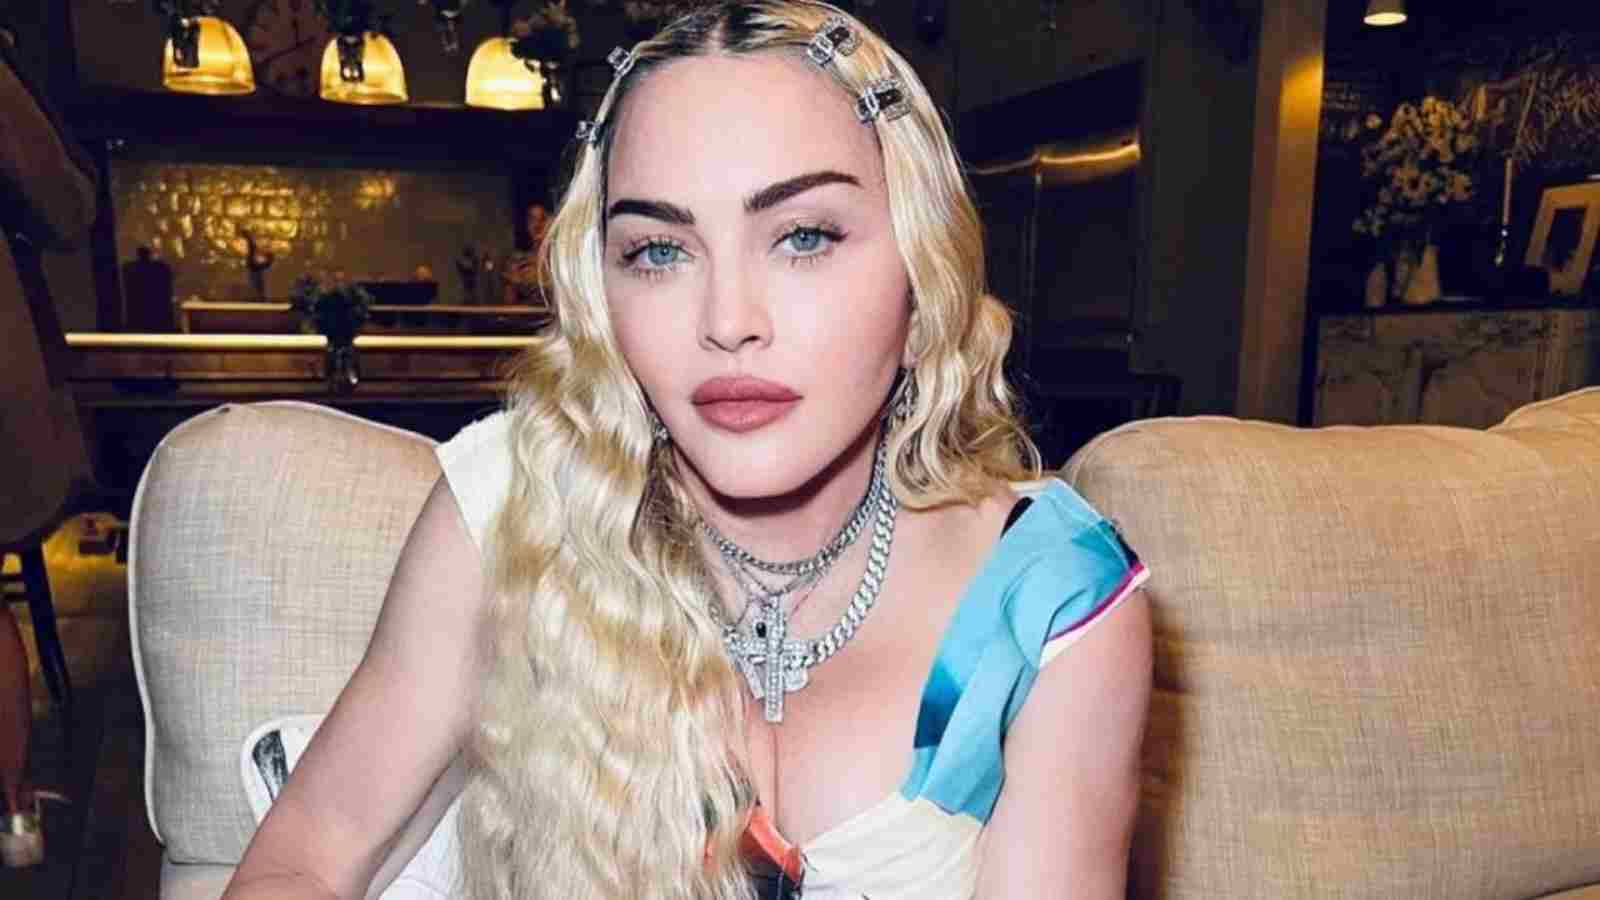 Madonna's fans show concern over her new TikTok video